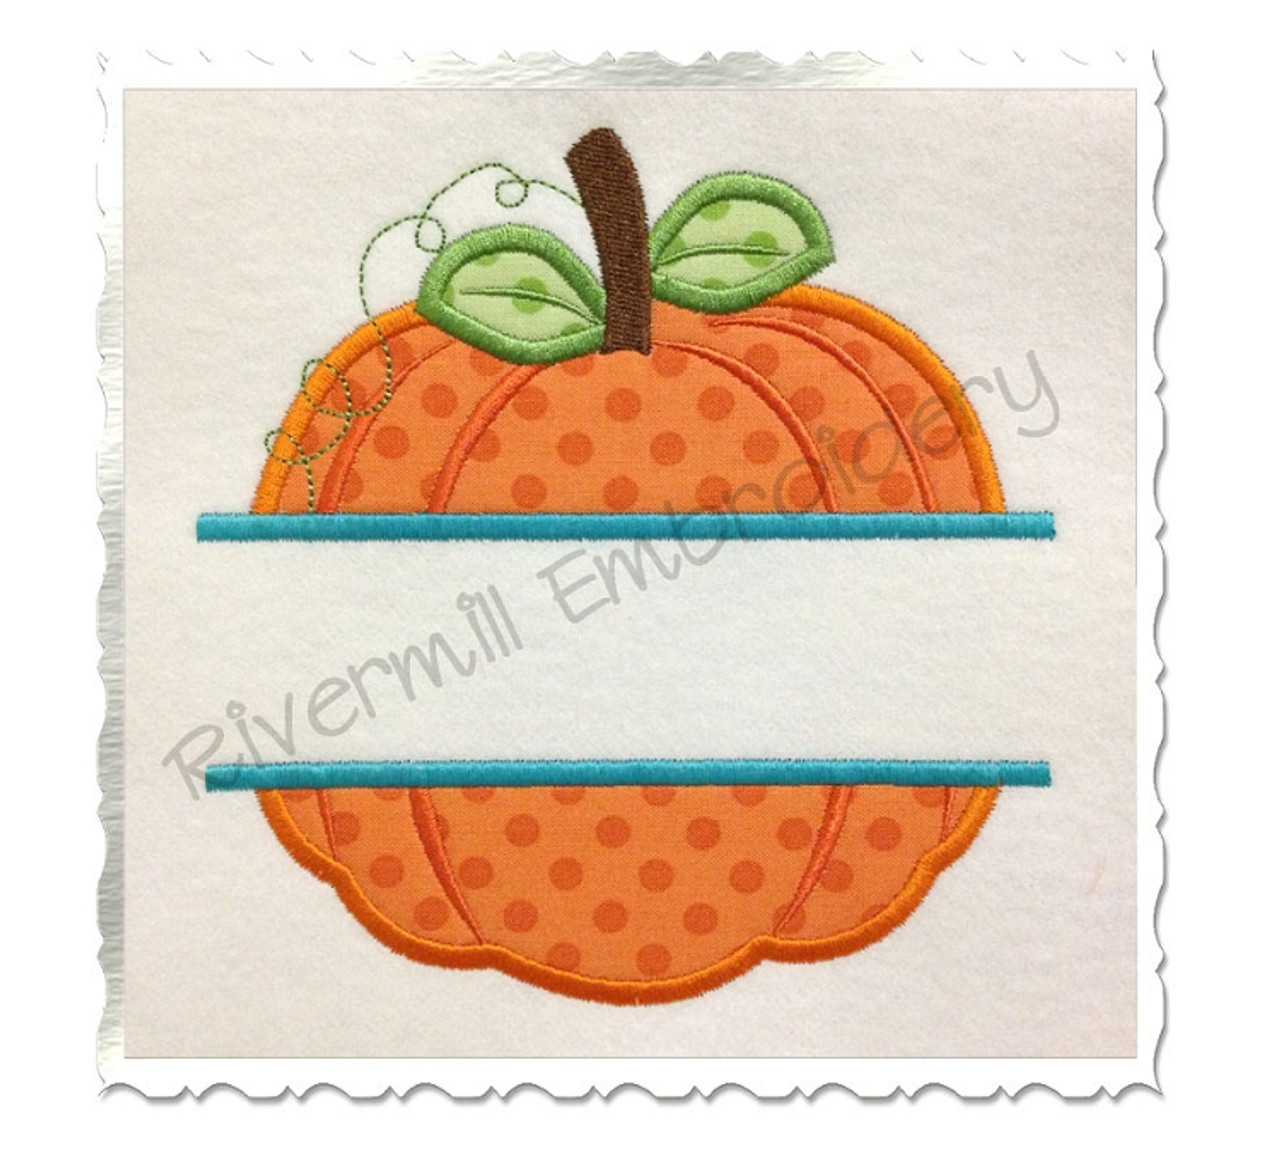 Pumpkins Pumpkin Trio Sketch Machine Embroidery Design - Rivermill  Embroidery